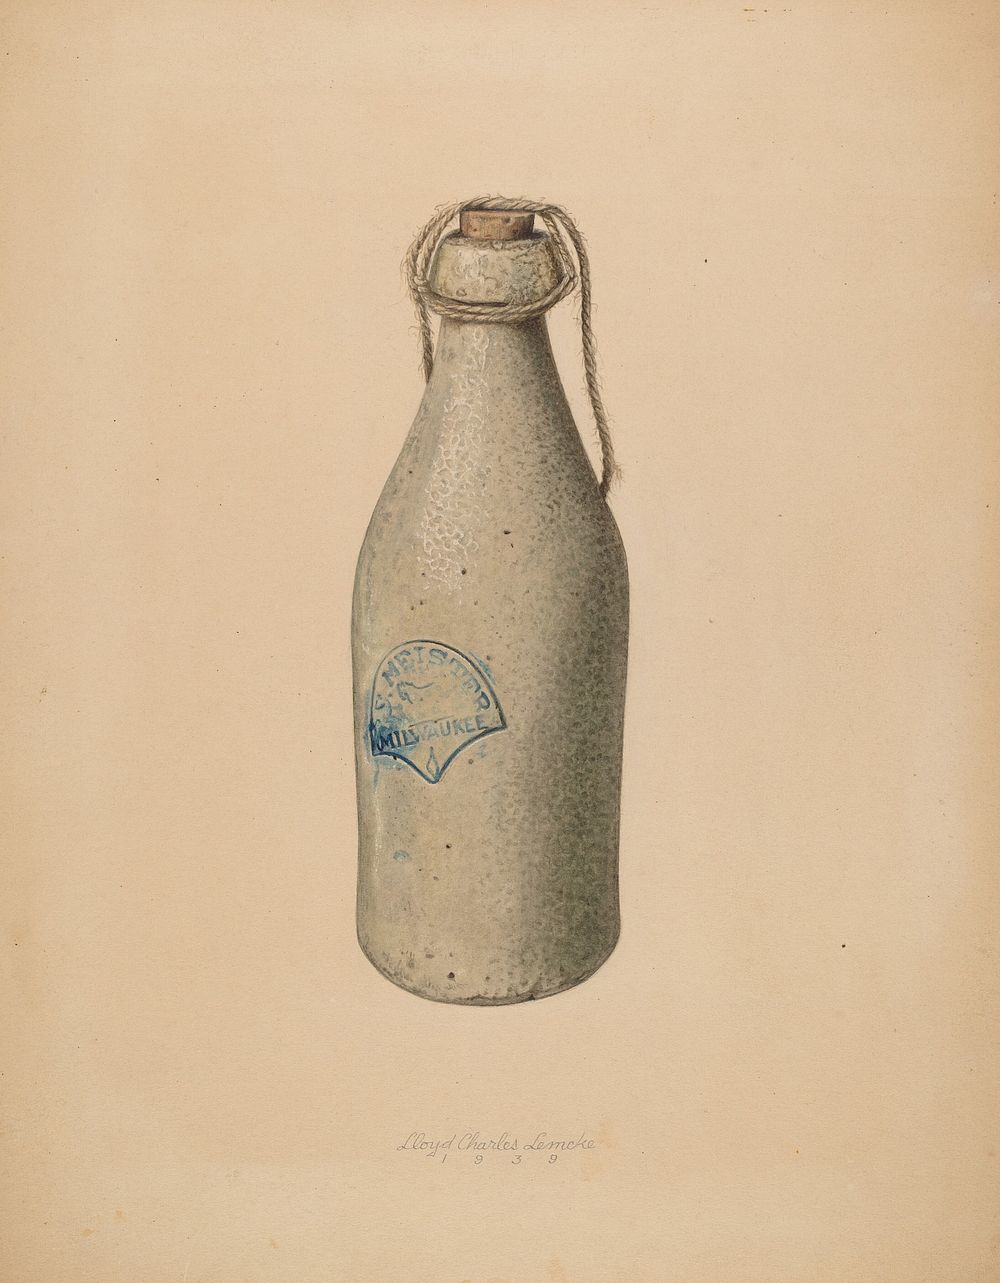 Weiss Beer Bottle (1939) by Lloyd Charles Lemcke.  